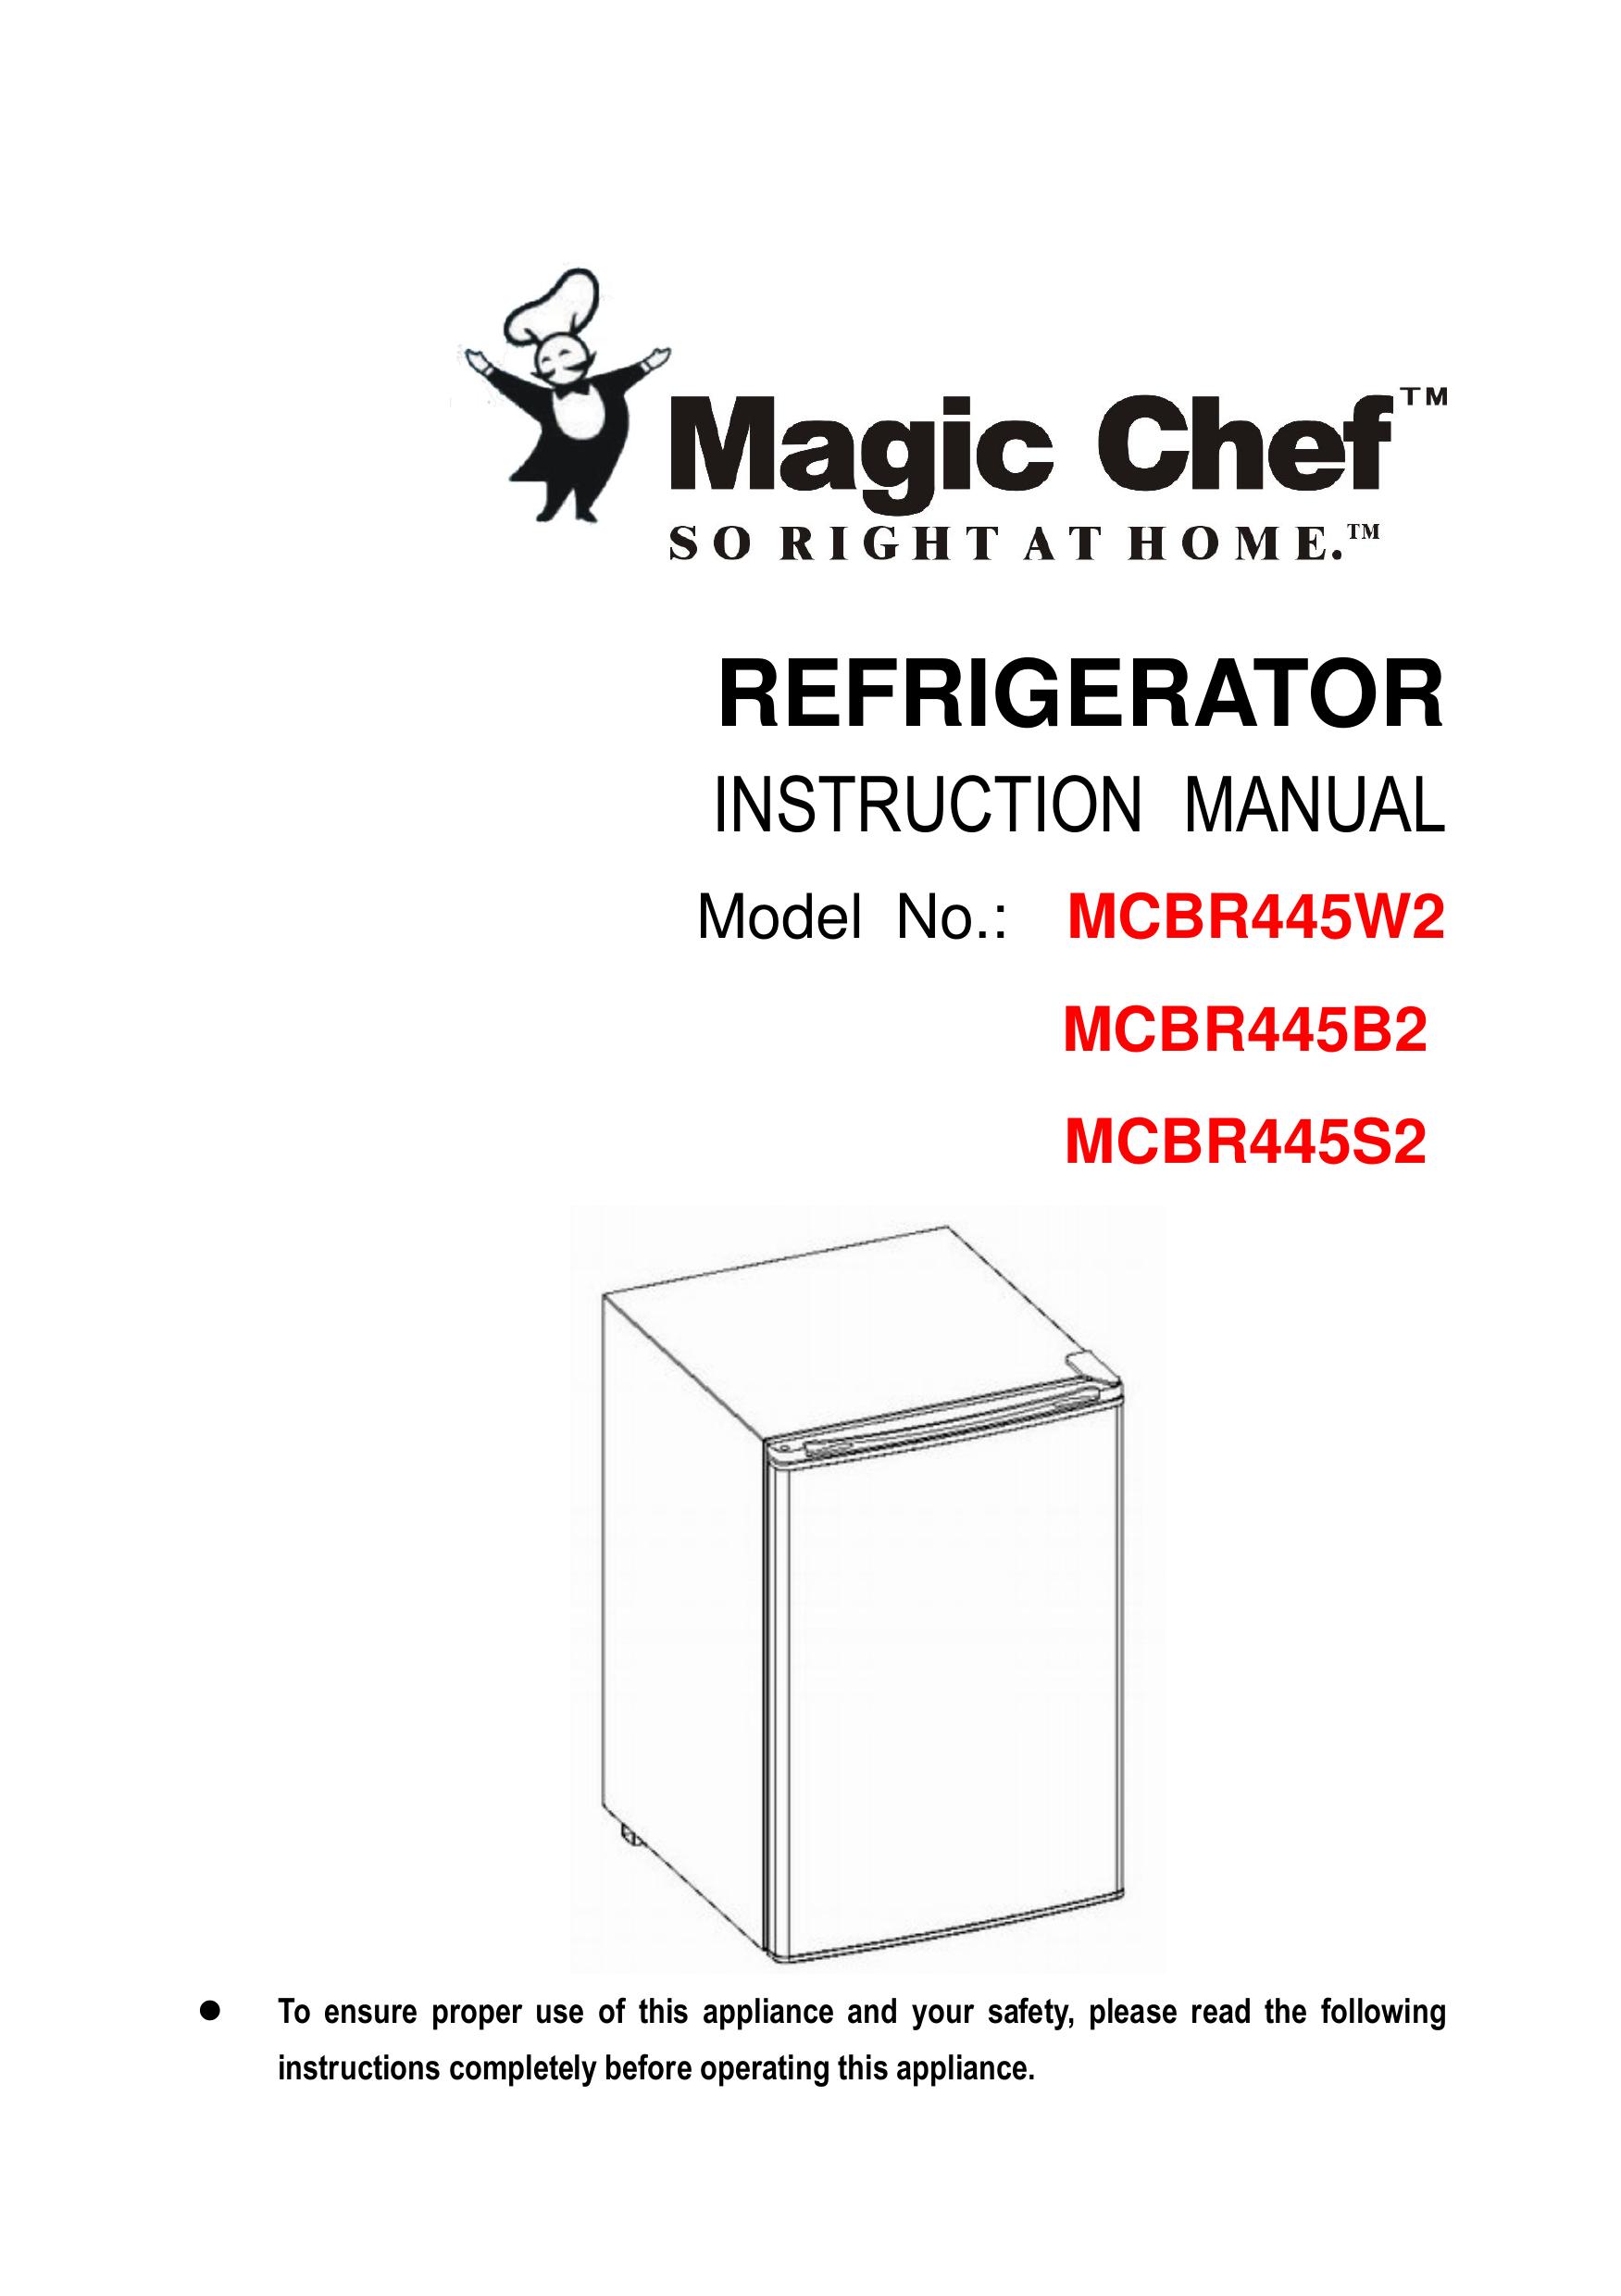 Magic Chef MCBR445B2 Refrigerator User Manual